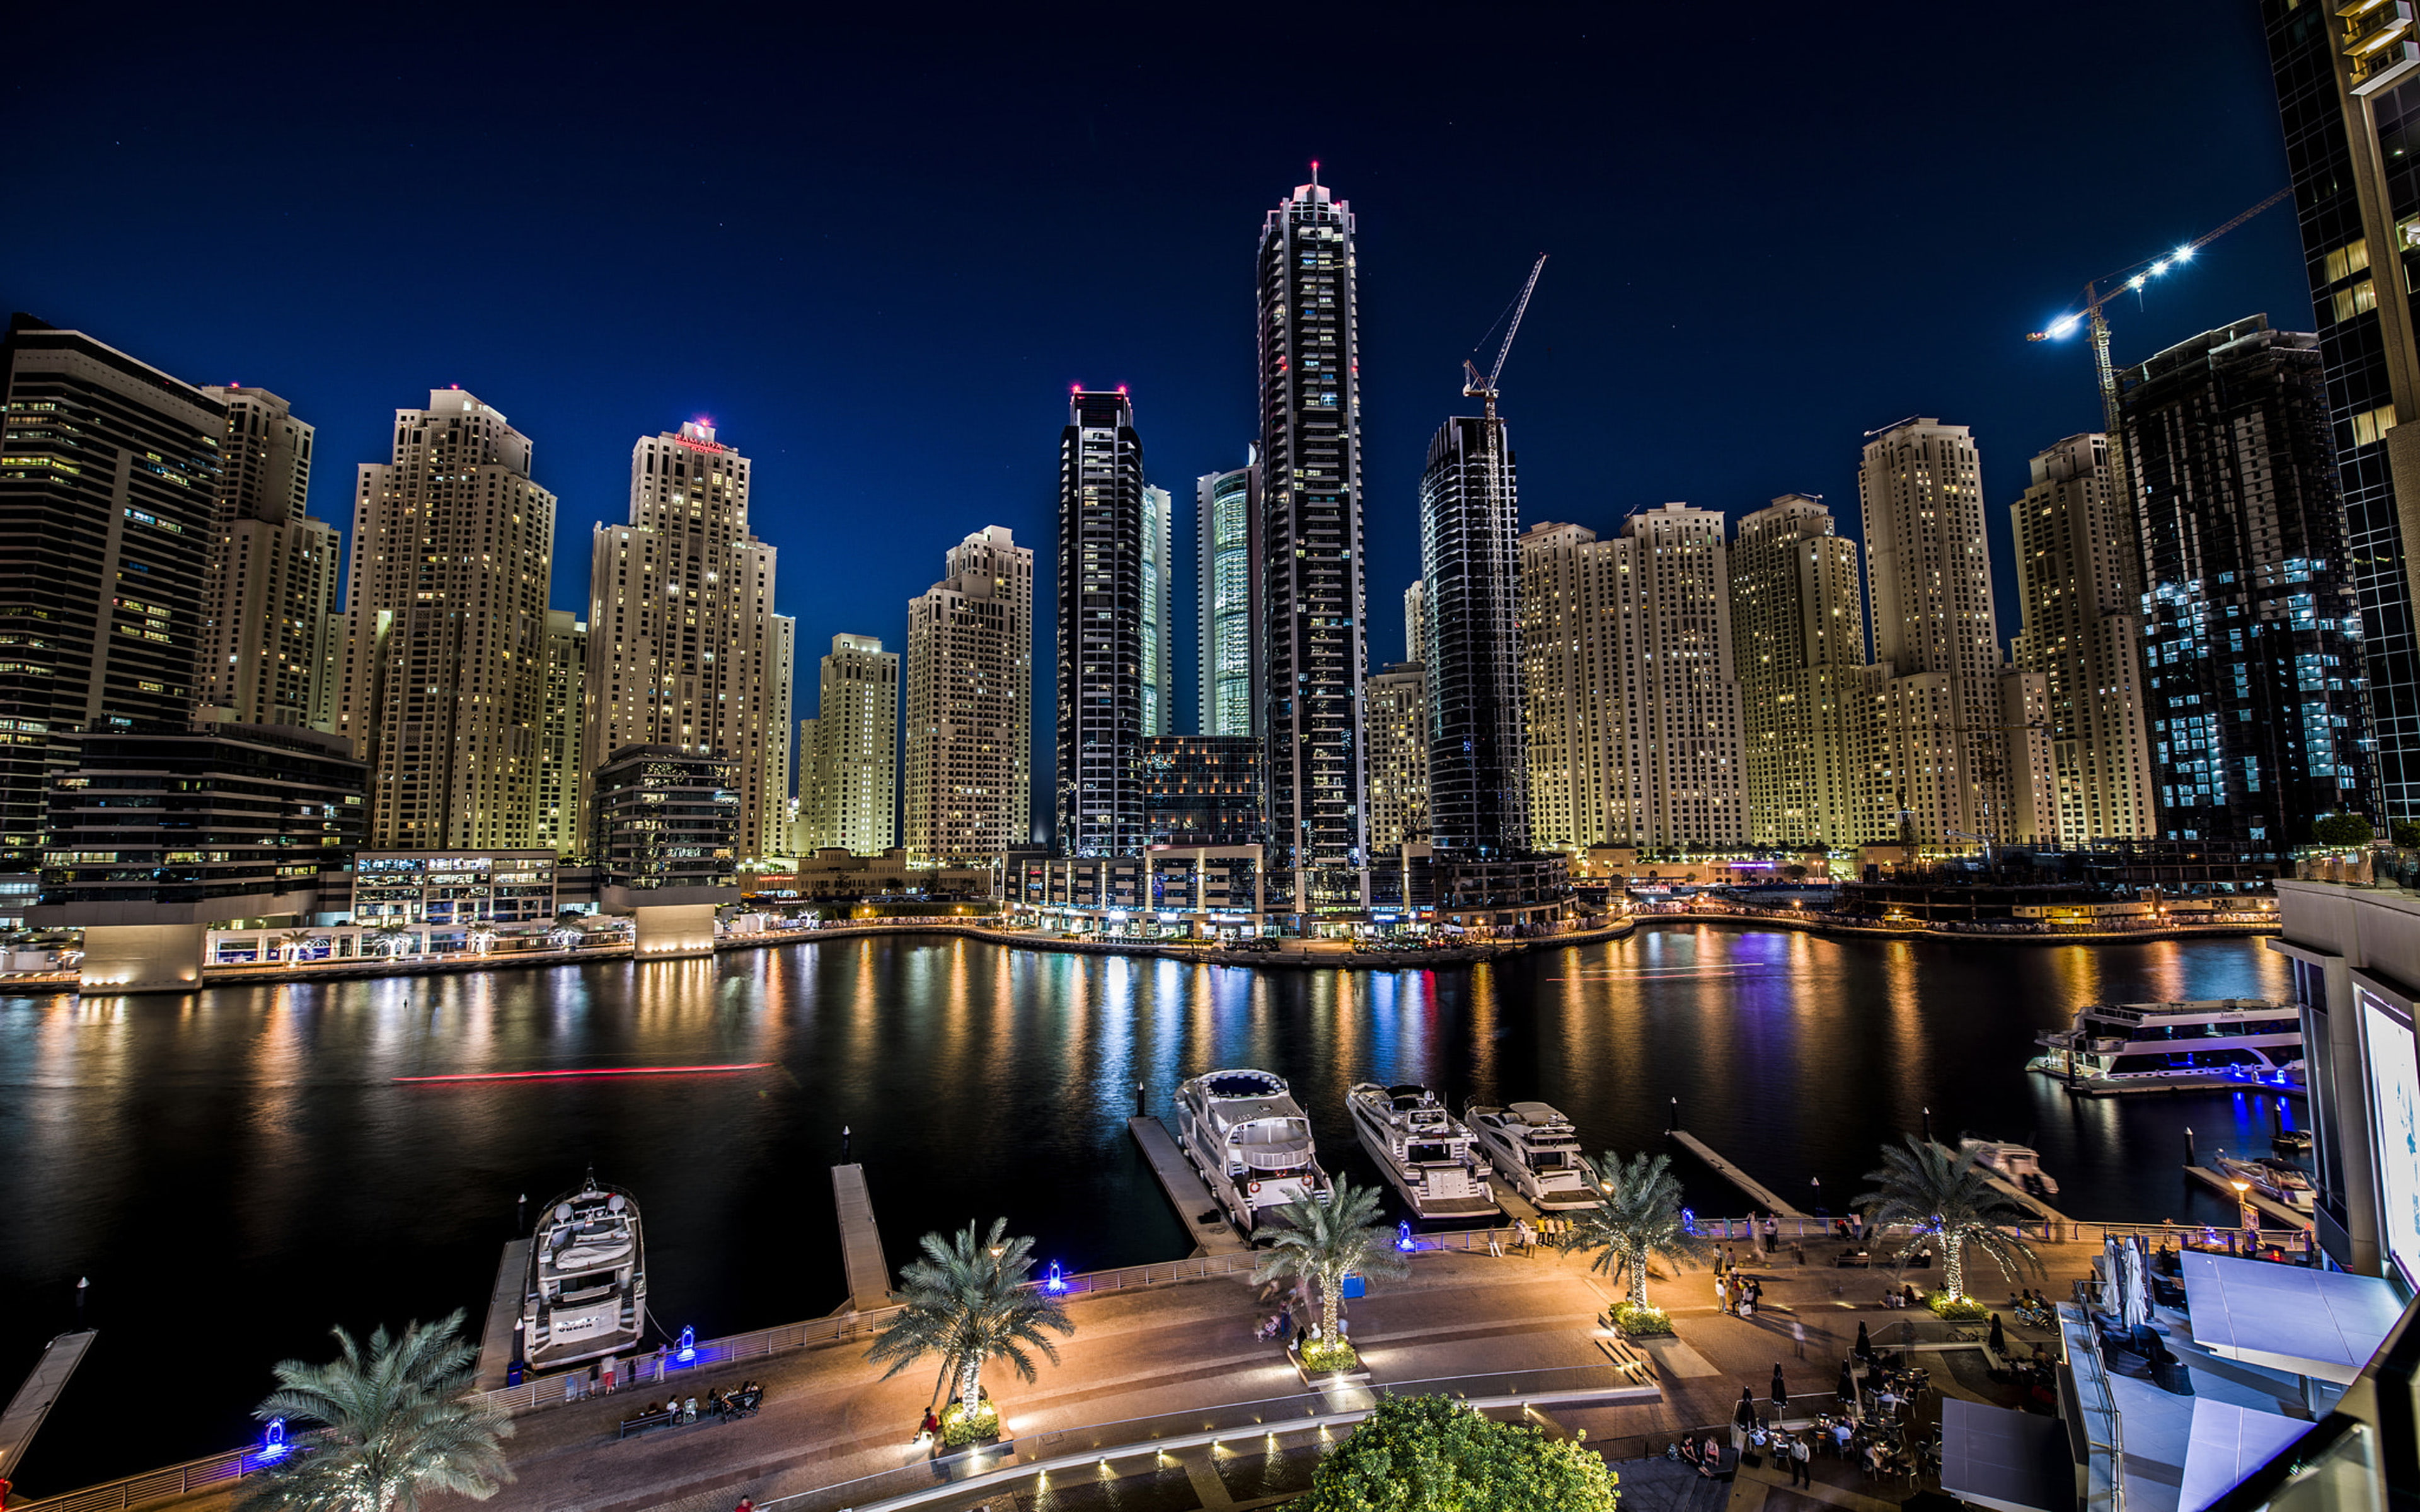 Dubai Marina Night Light City Landscape United Arab Emirates  Ultra Hd Wallpaper For Desktop Mobile Phones And Laptops 3840×2400